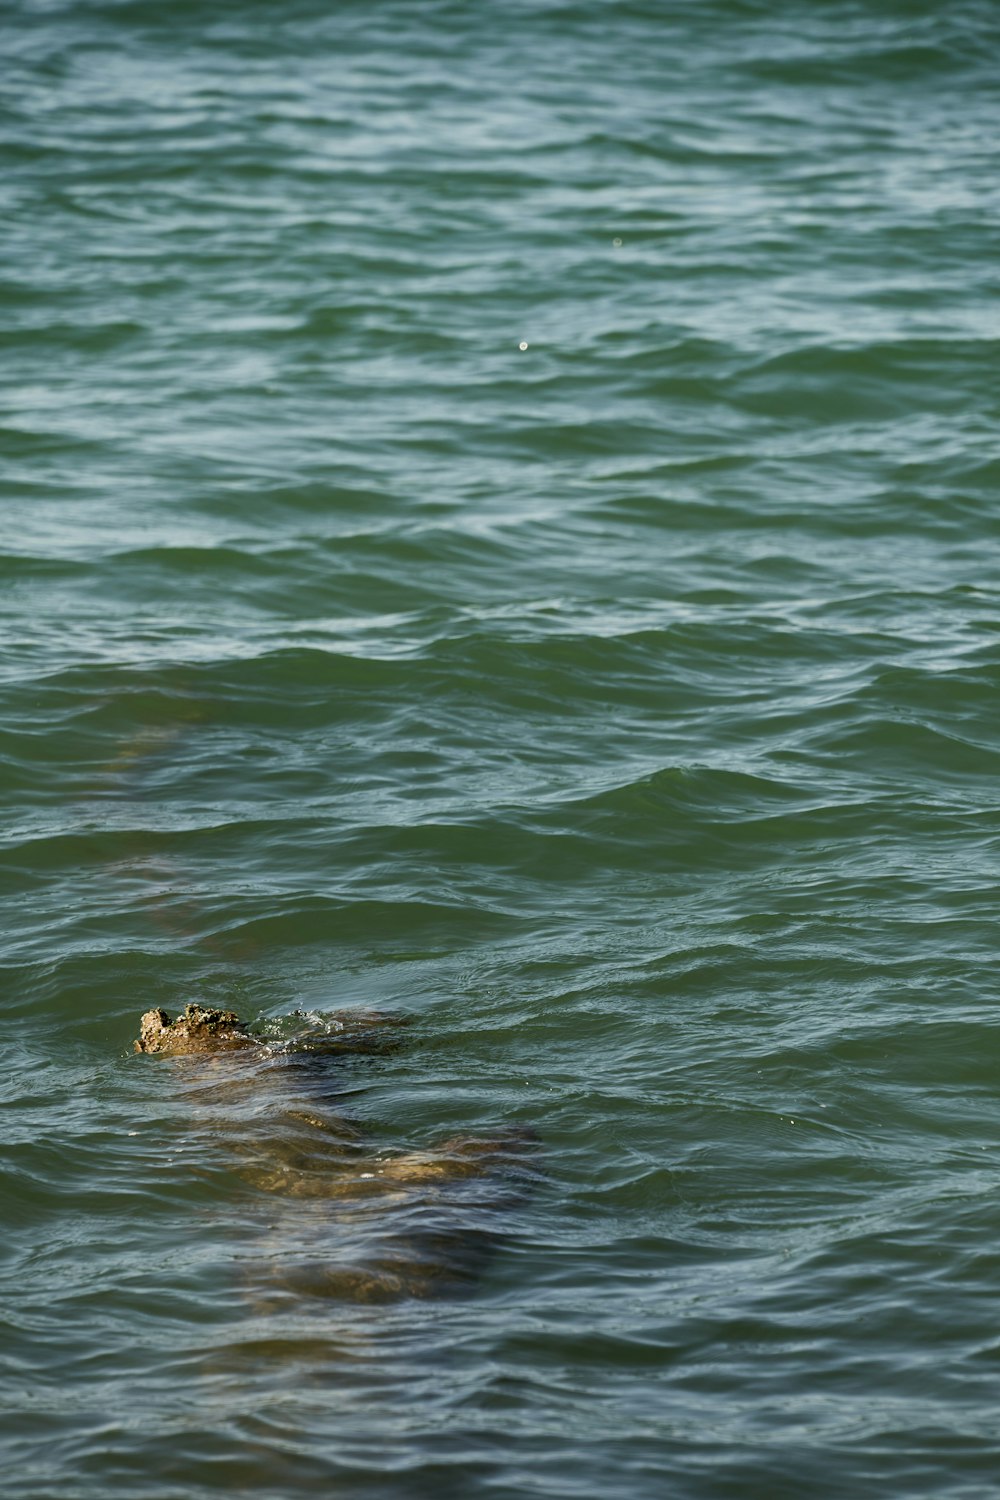 a crocodile swimming in the water